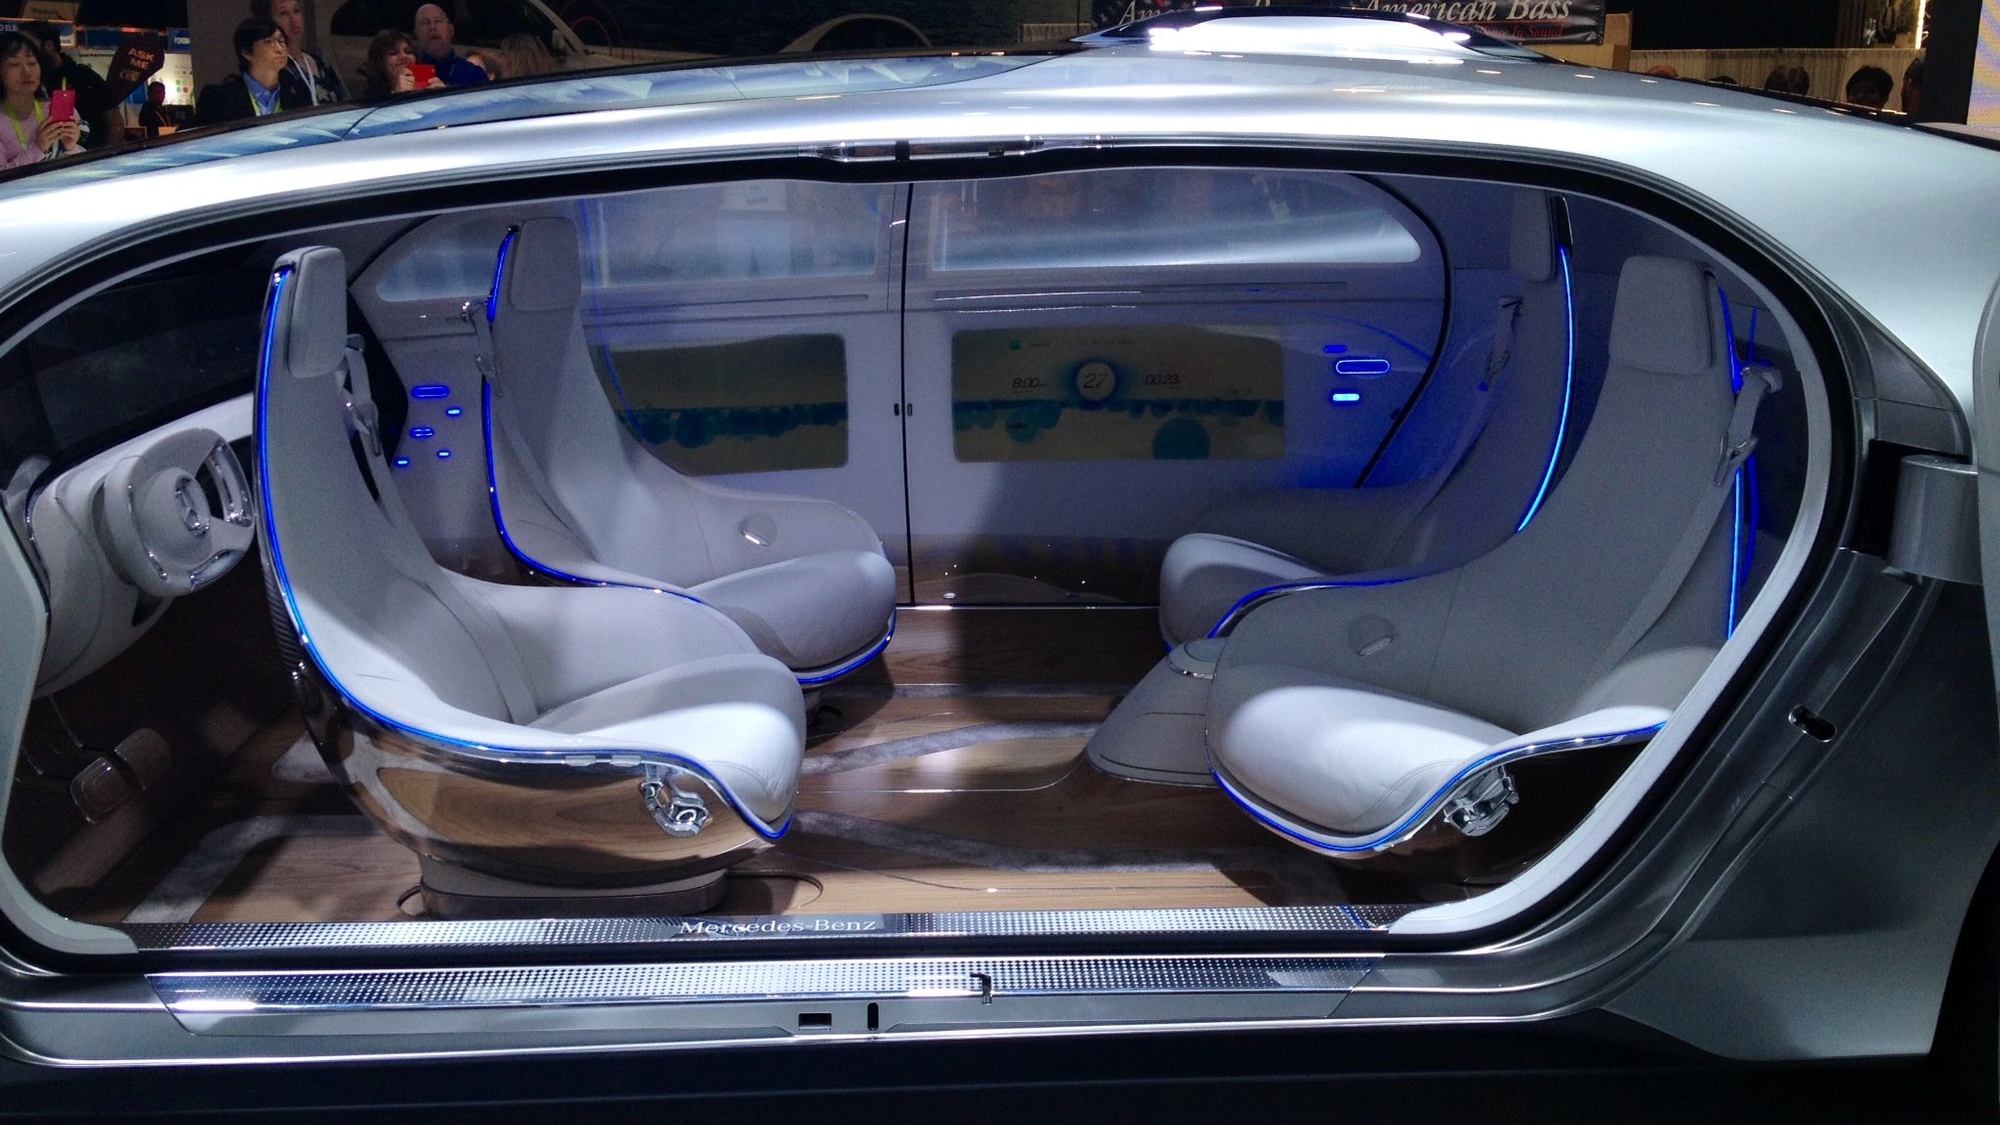 Mercedes-Benz F015 Luxury in Motion concept, 2015 Consumer Electronics Show  [photo: Matthew Askari]